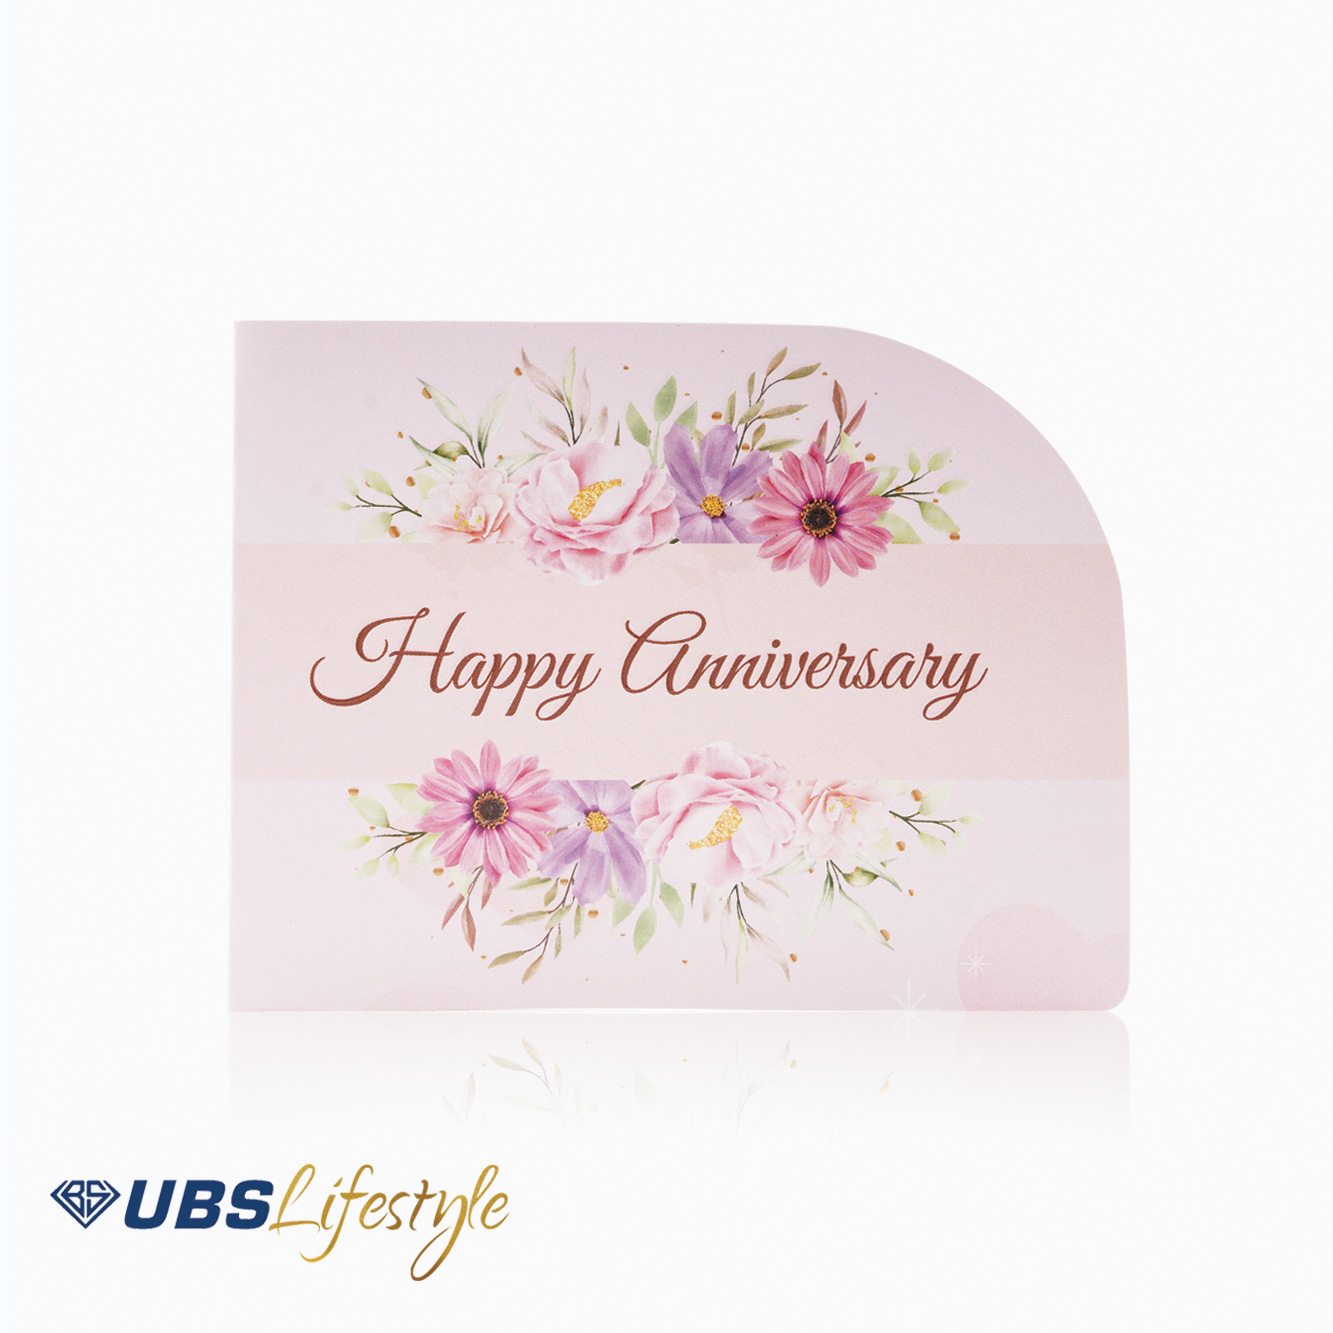 Kartu Ucapan UBS Lifestyle Edisi Anniversary - Yakkk0480